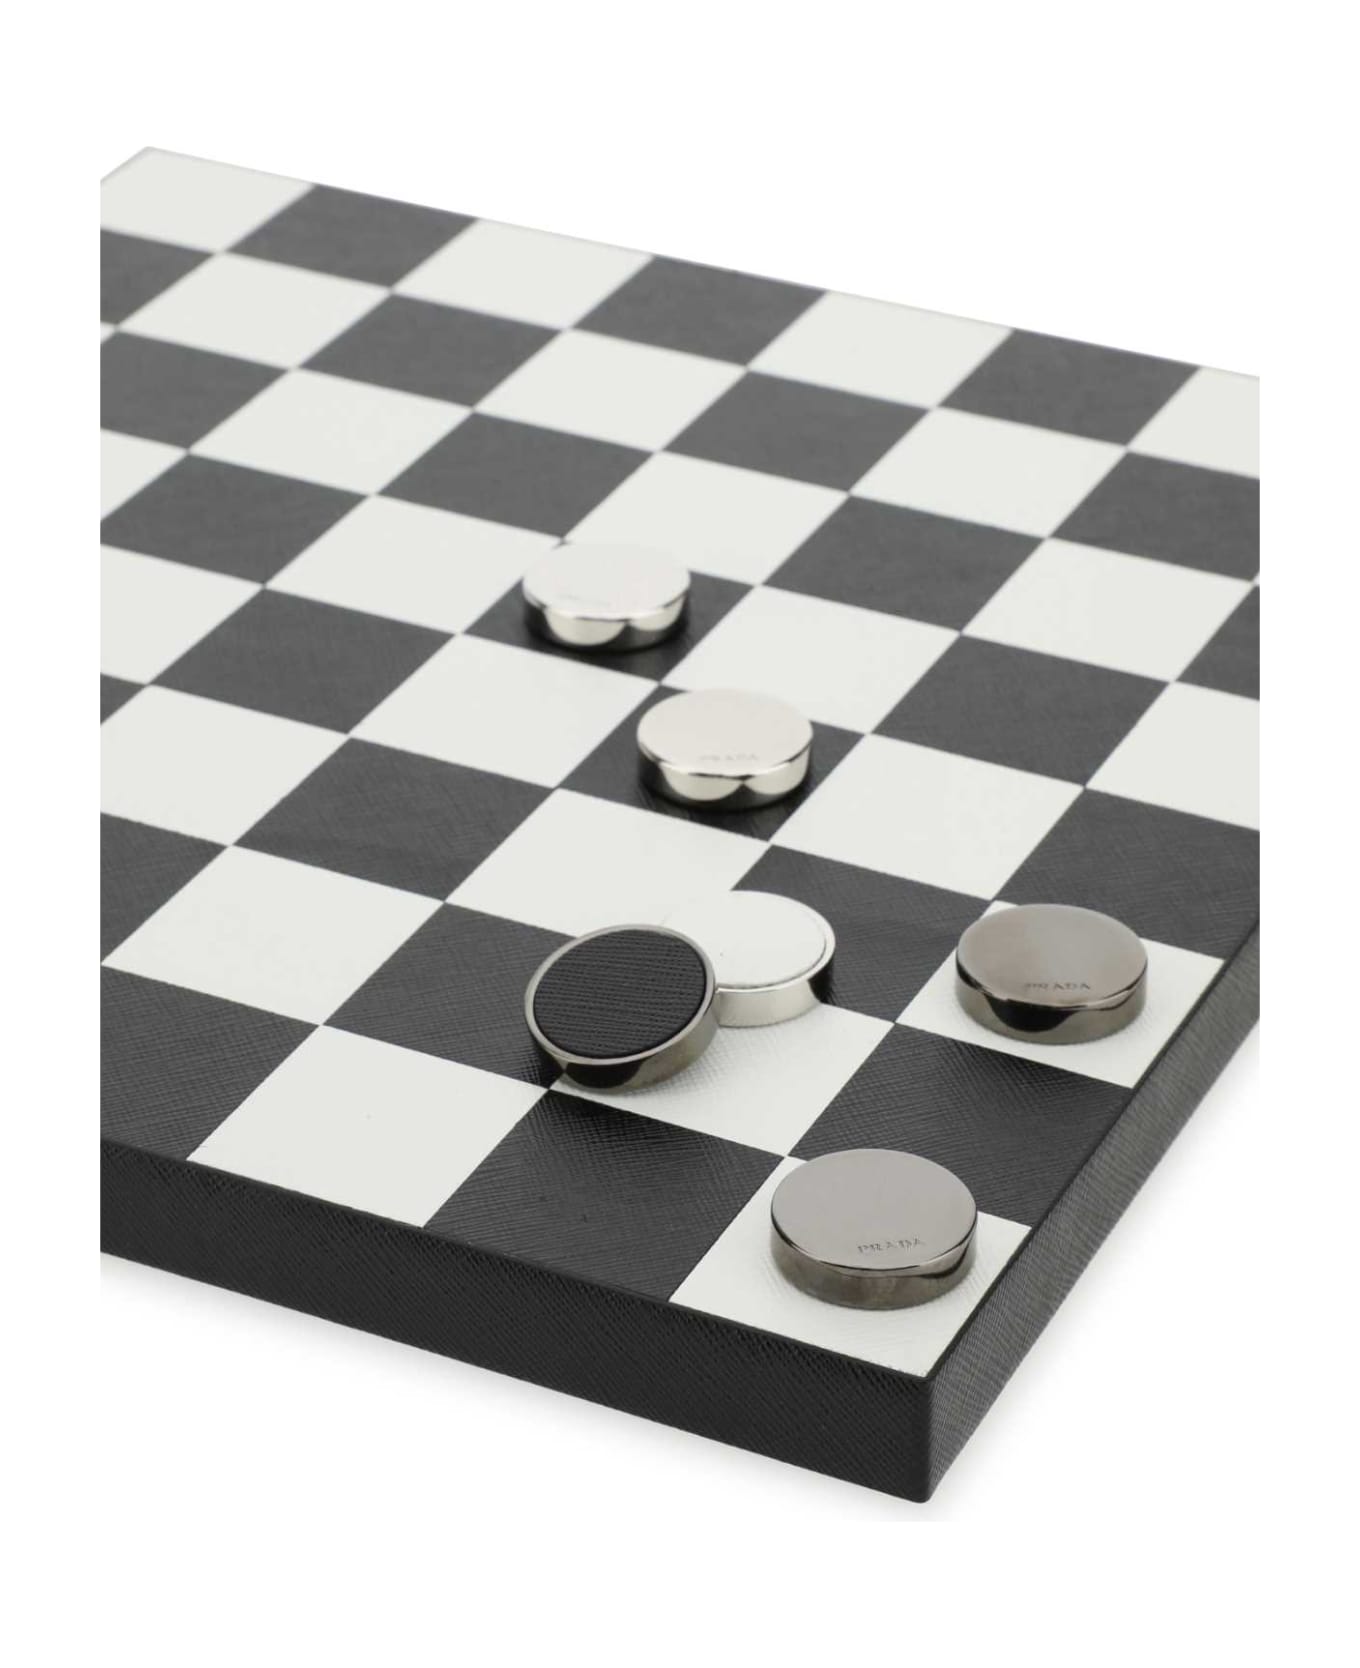 Prada Black Leather Checkers Game Kit - NERO インテリア雑貨